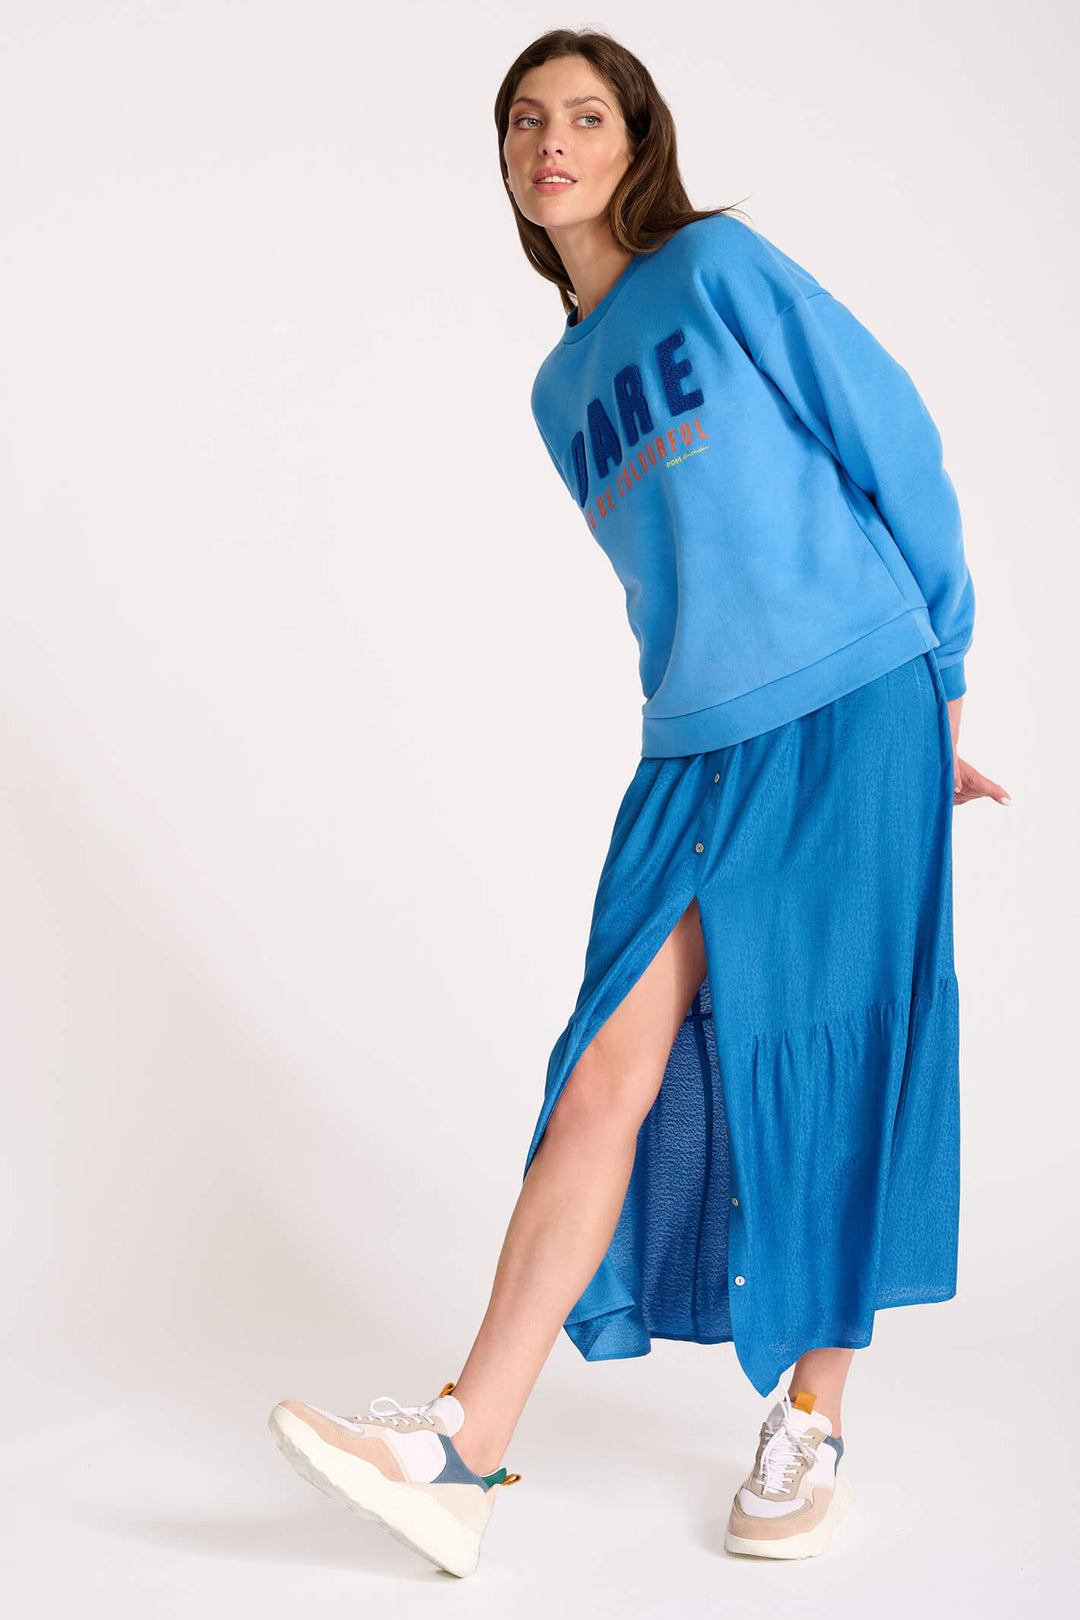 POM Amsterdam SP6849 Tess Mediterranean Blue Skirt - Shirley Allum Boutique